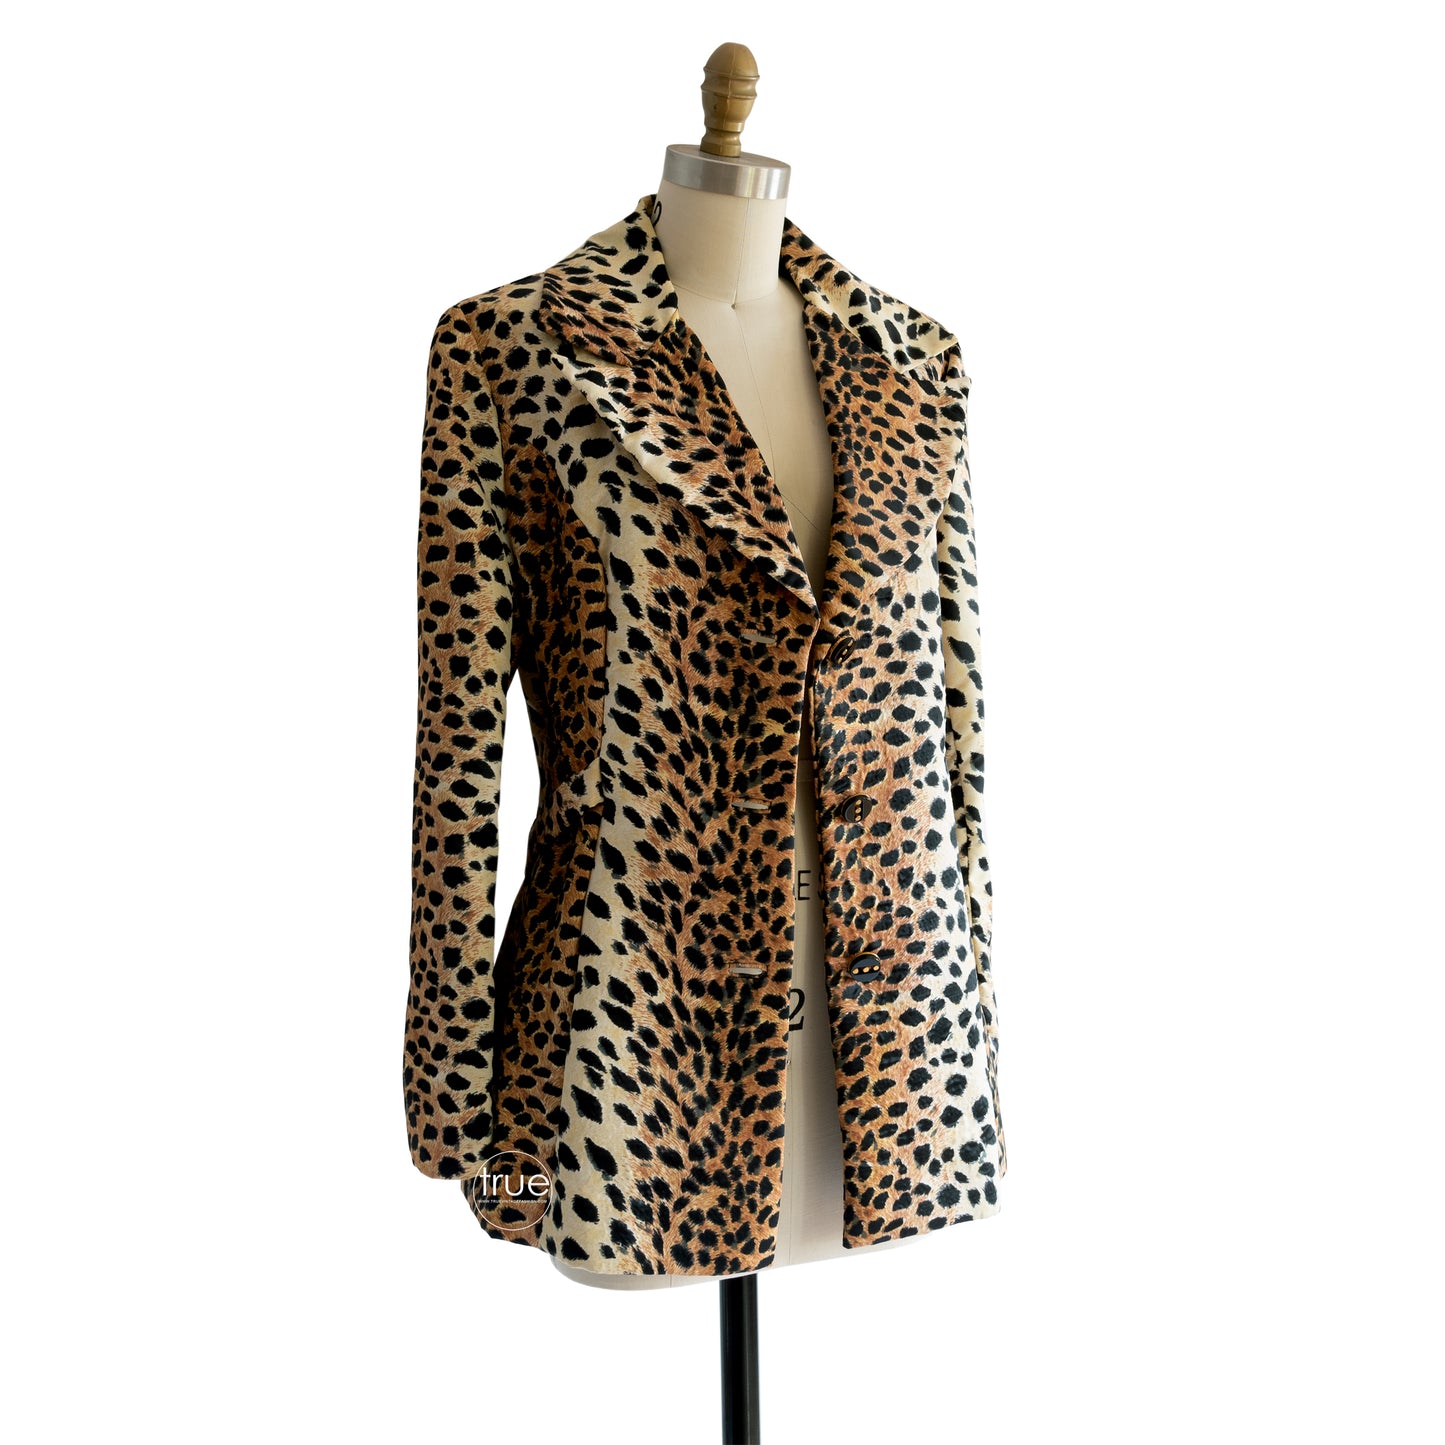 vintage 1960's jacket ...wardrobe staple LILLI ANN leopard jacket w/amazing buttons & pockets!